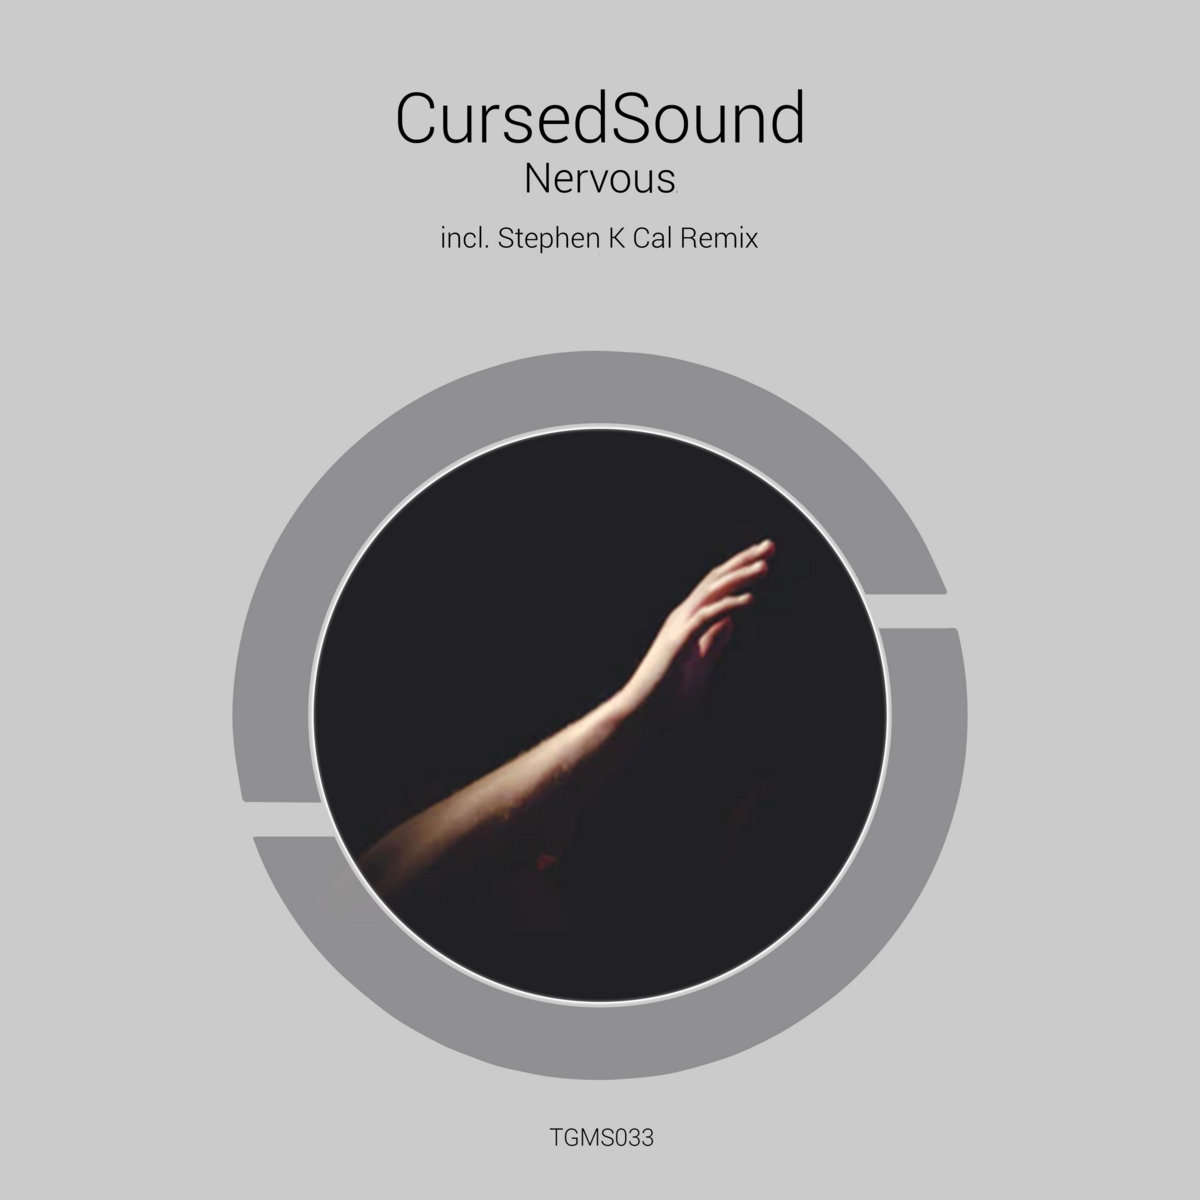 CursedSound releases "Nervous"